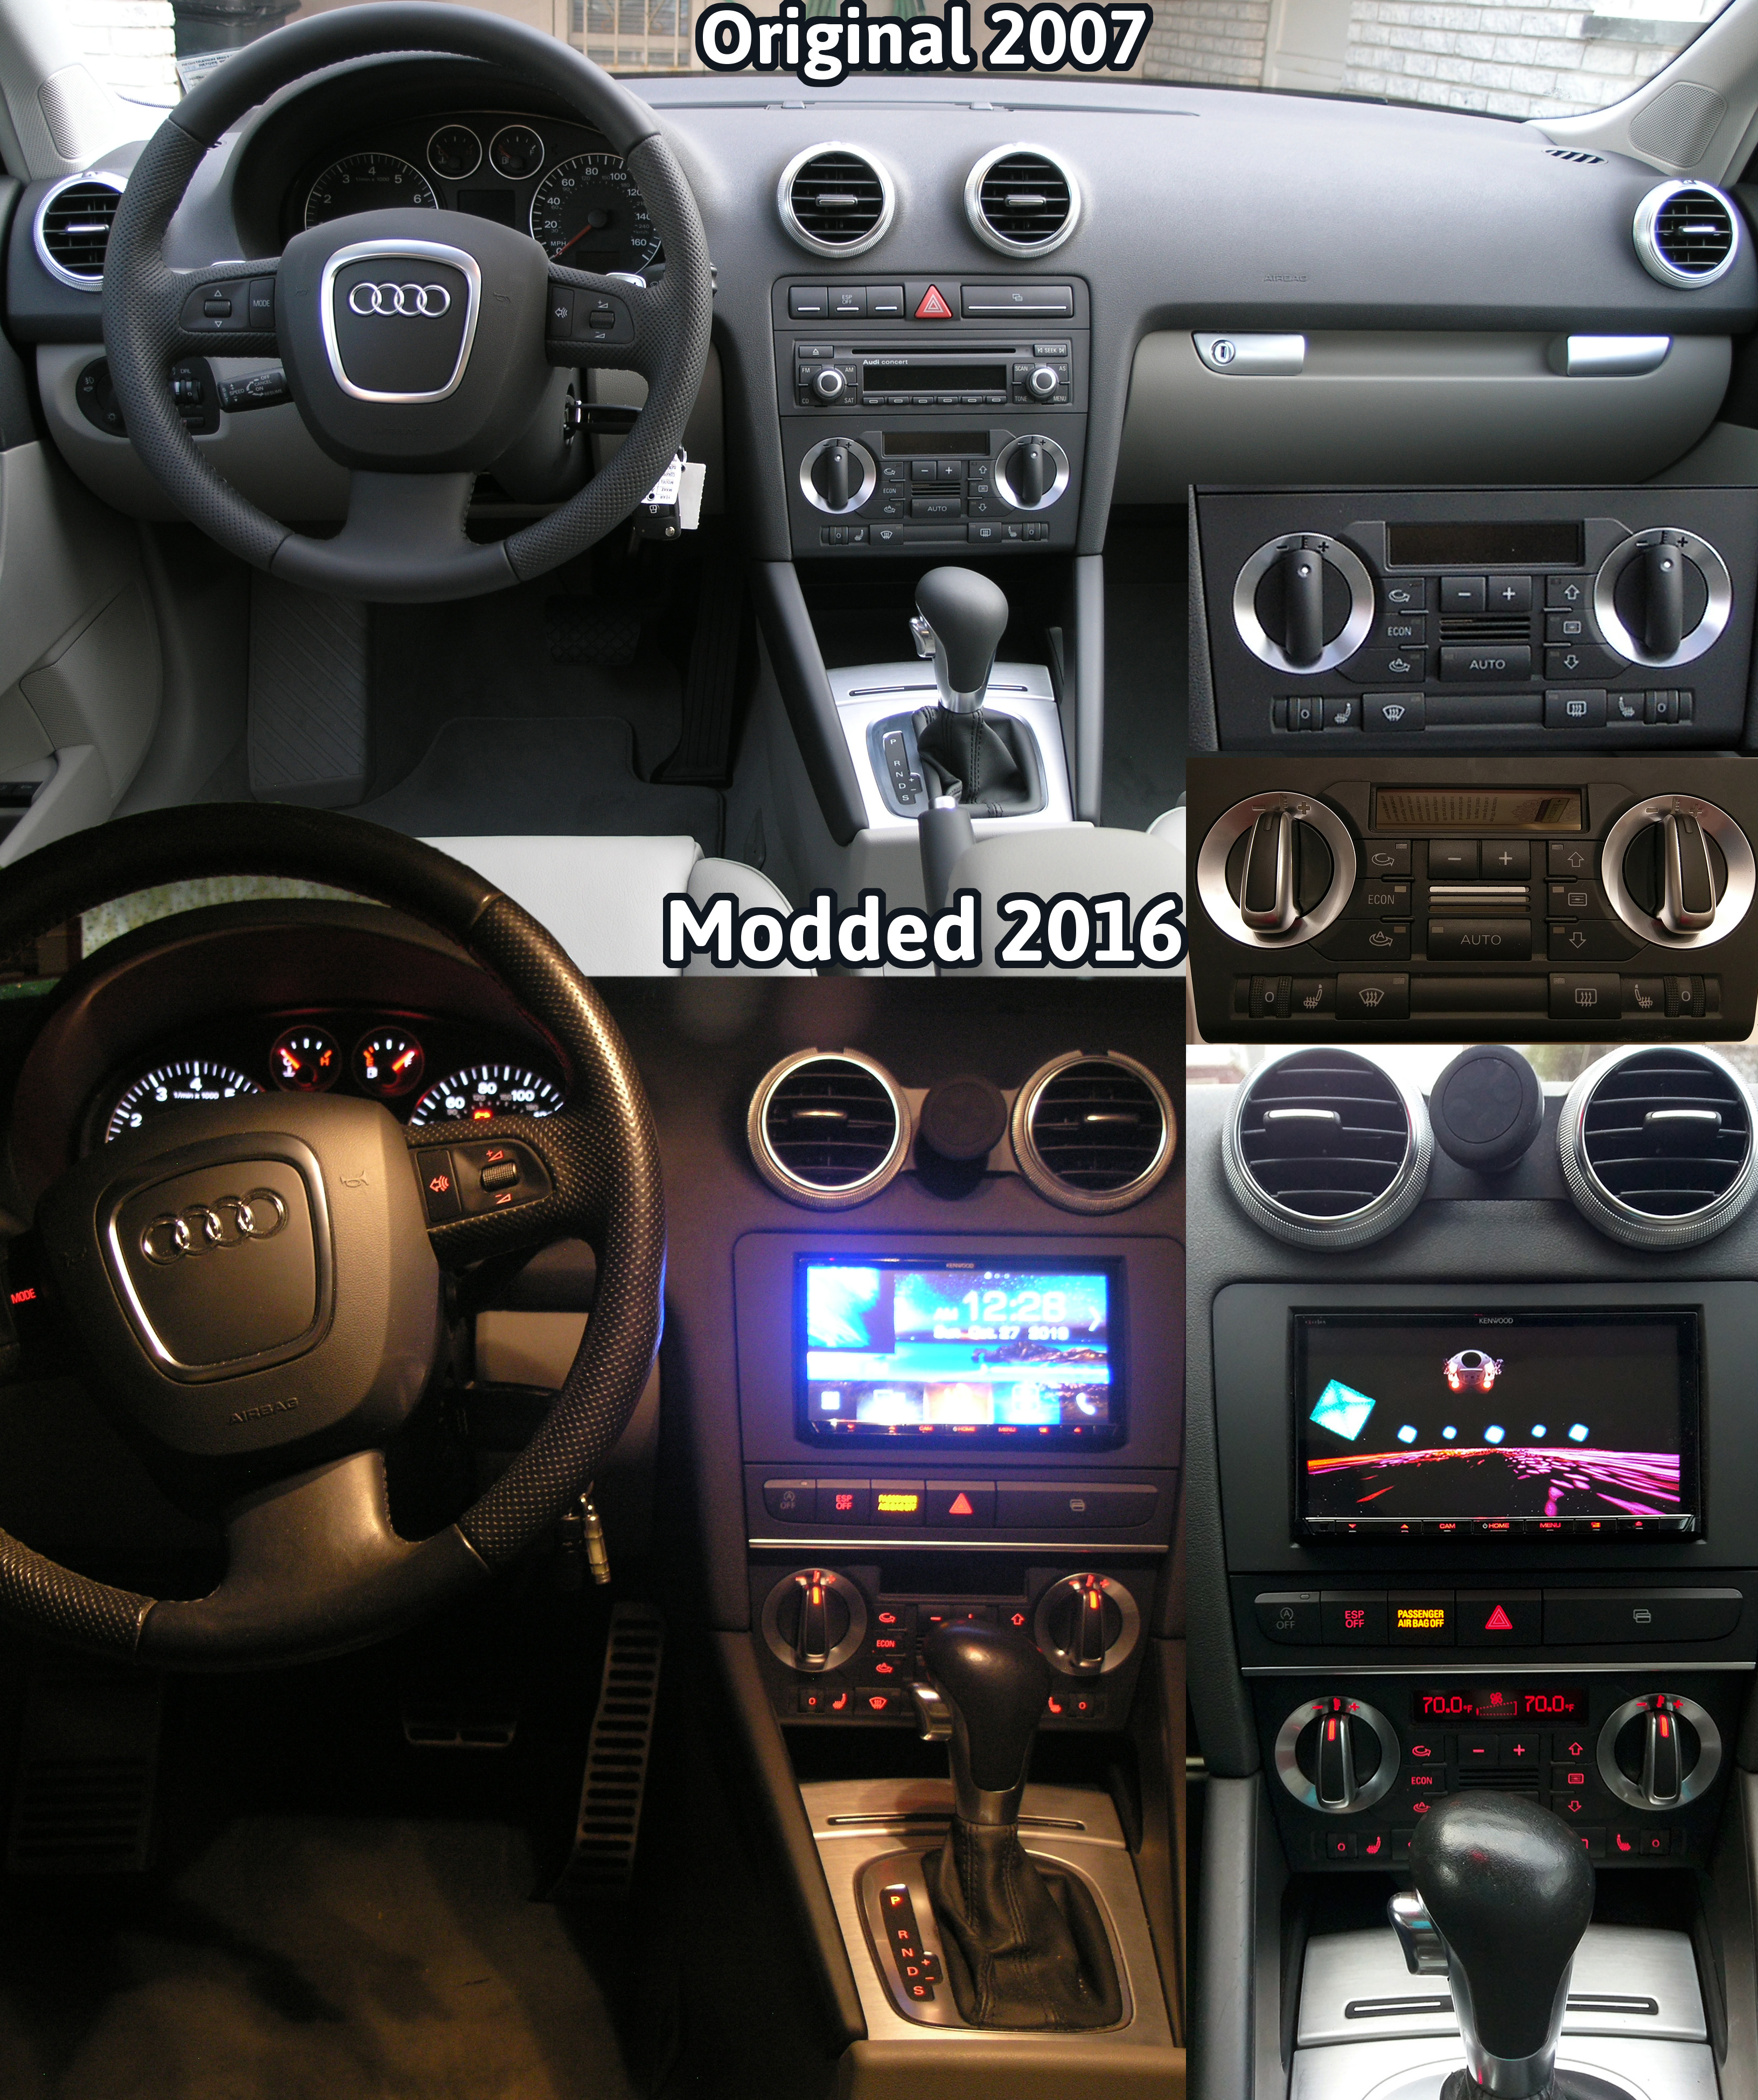 GK Audi A3 2007 console stereo mod lg